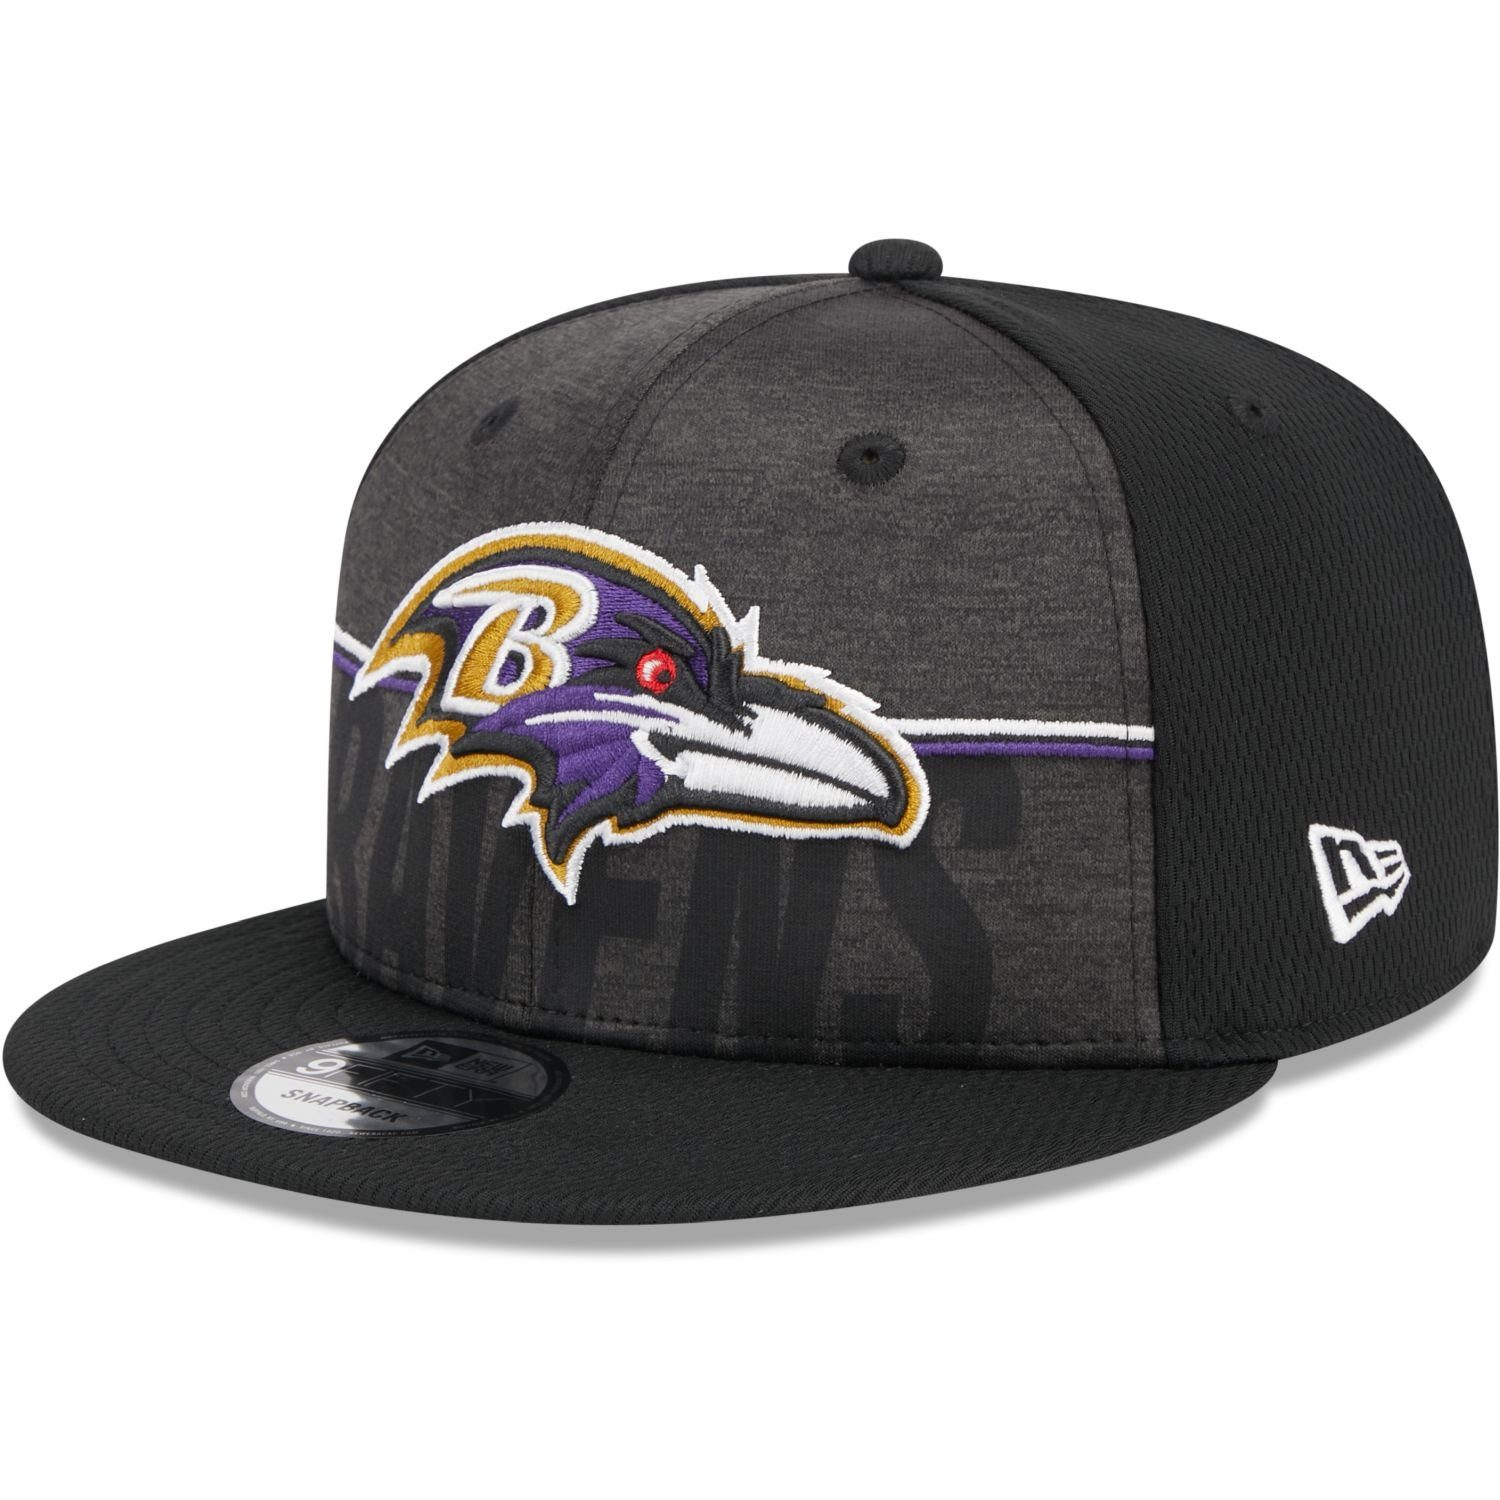 New Era Snapback Cap 9FIFTY TRAINING Baltimore Ravens